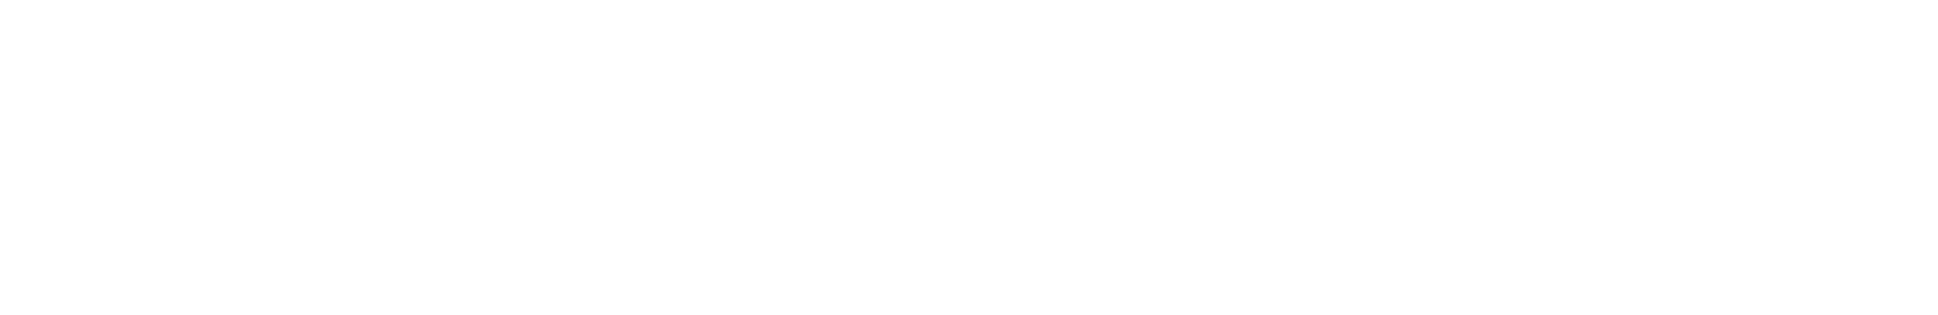 Journalism and Media logo